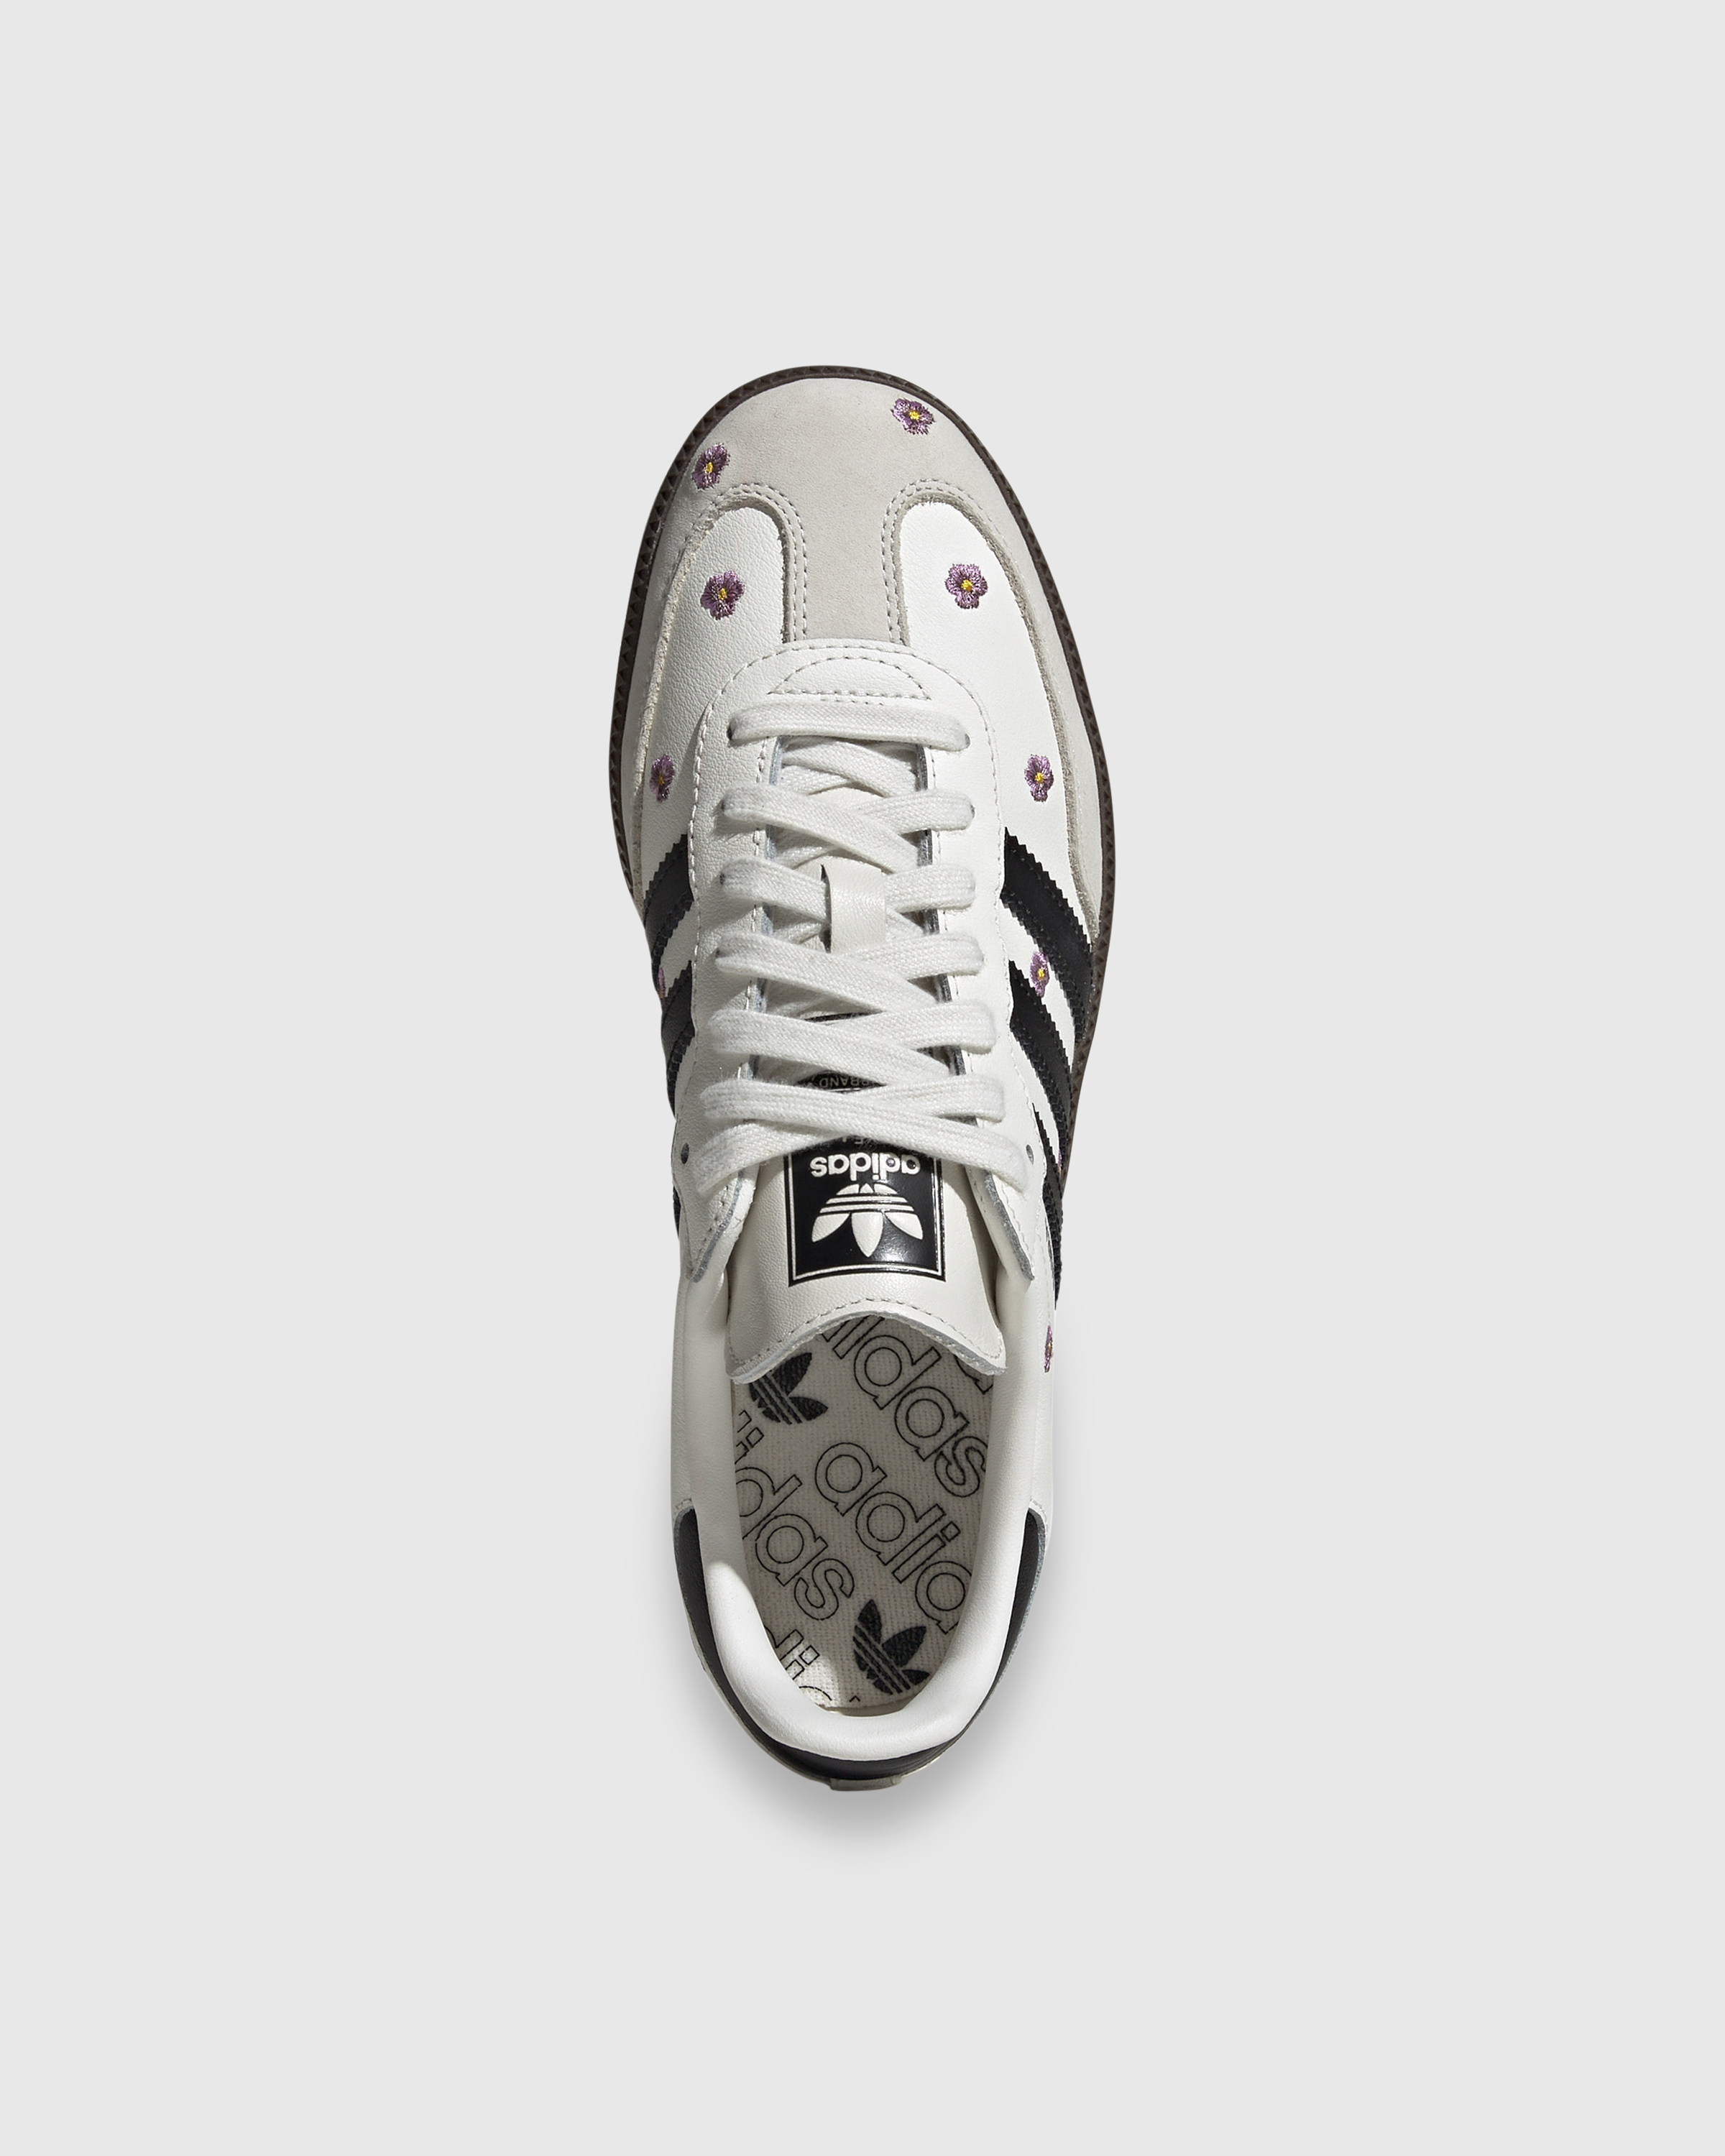 Adidas – Samba OG W White/Black/Gum - Low Top Sneakers - White - Image 5